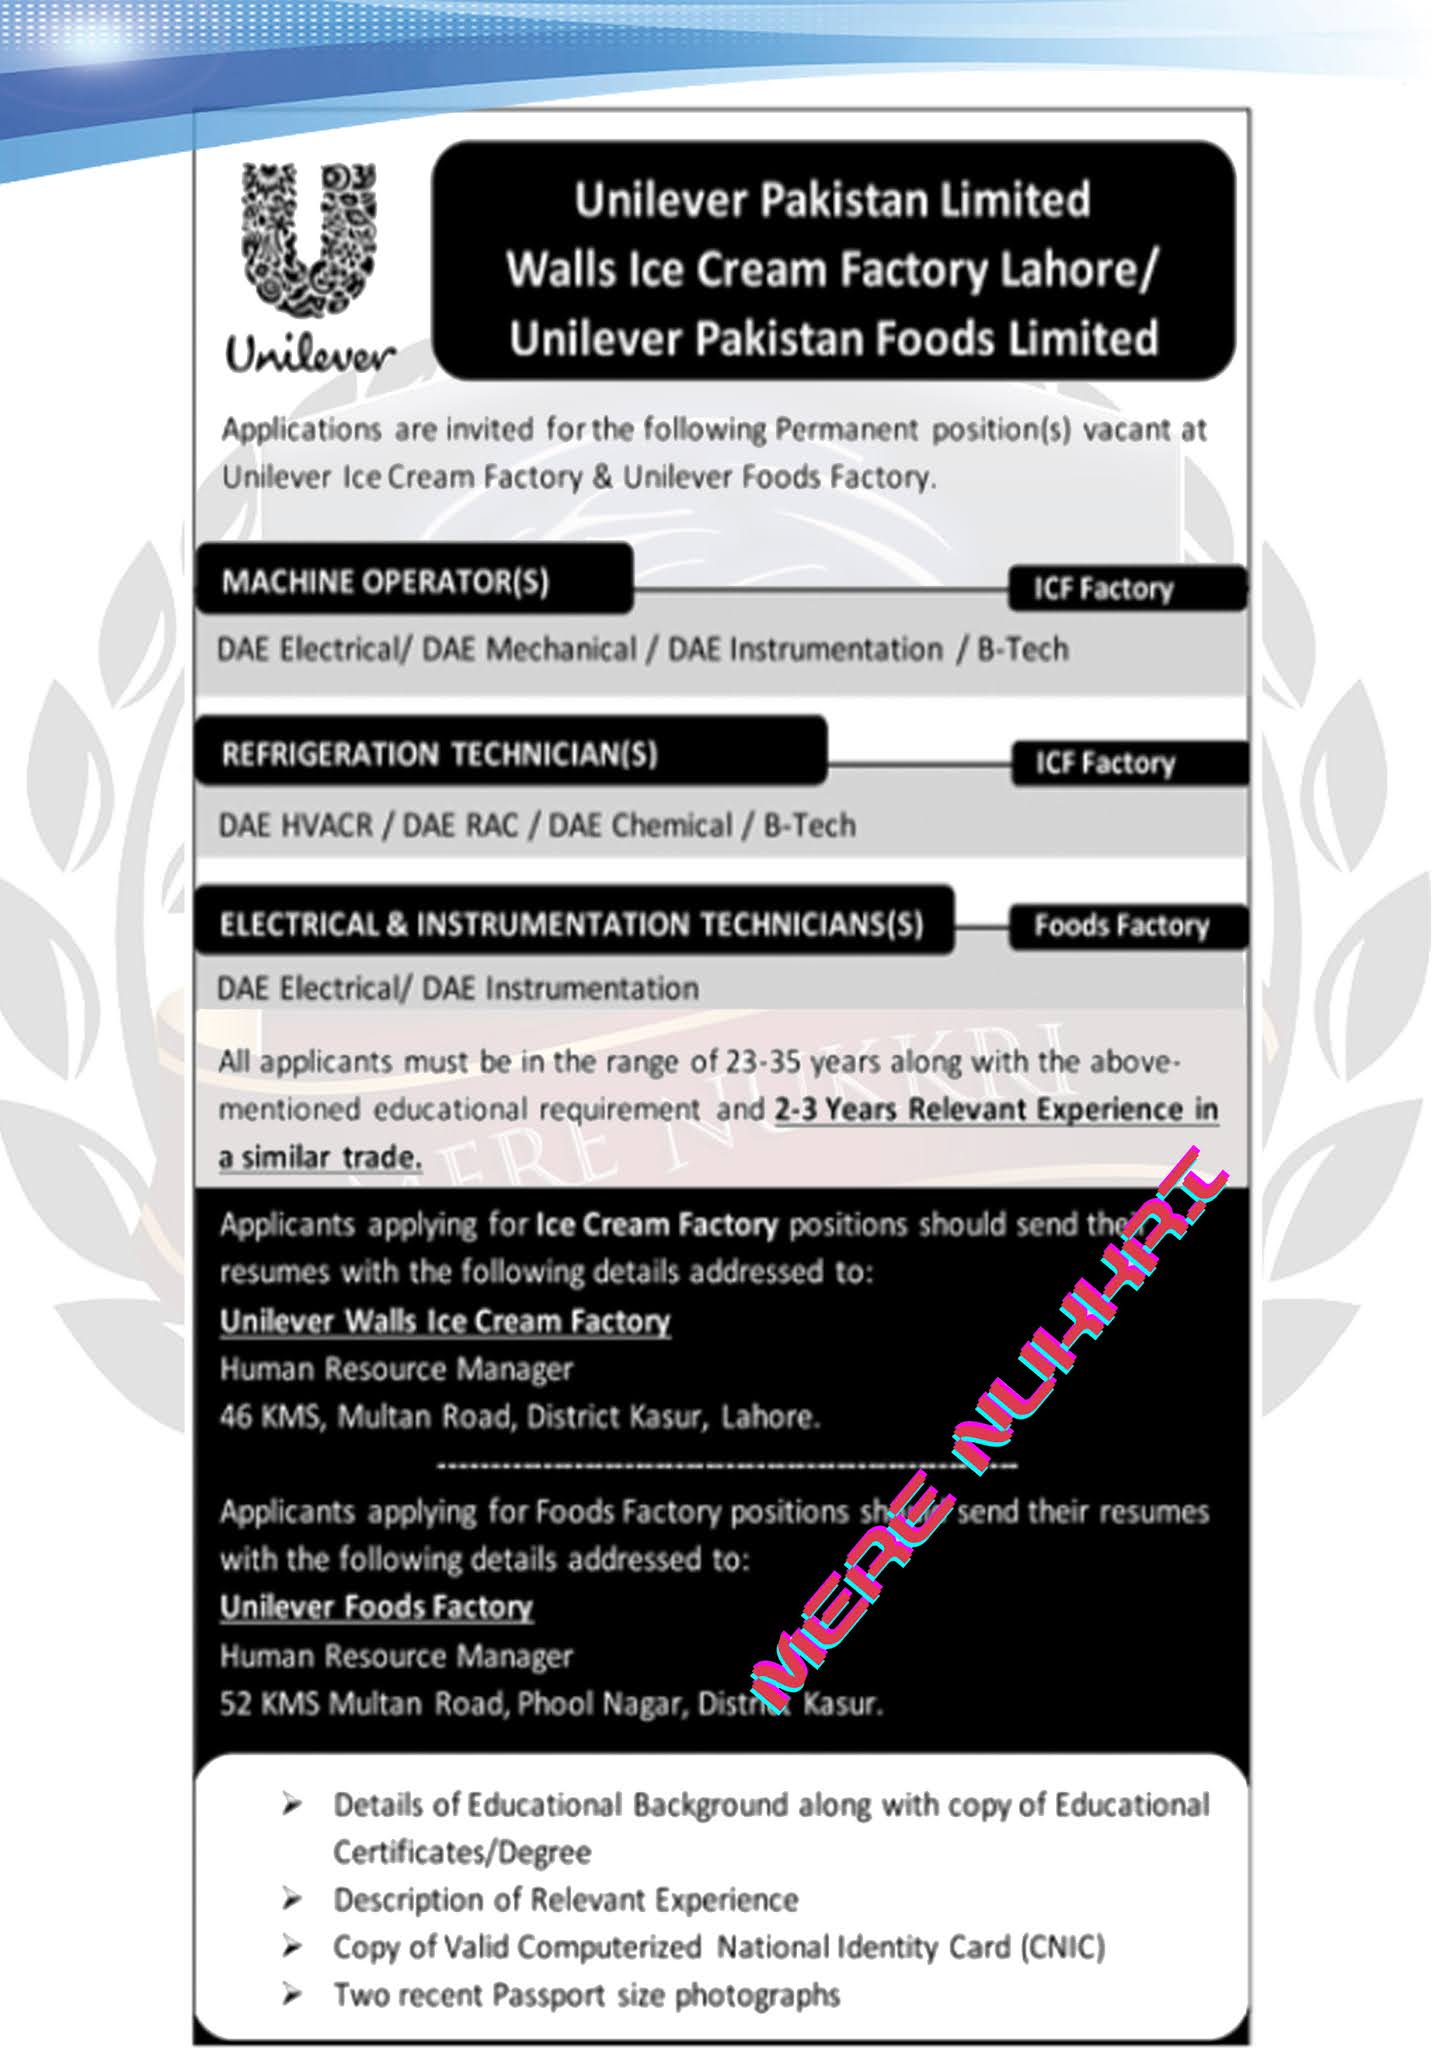 Unilever Pakistan Foods Limited Jobs | February 2021| www.merenukkri.com